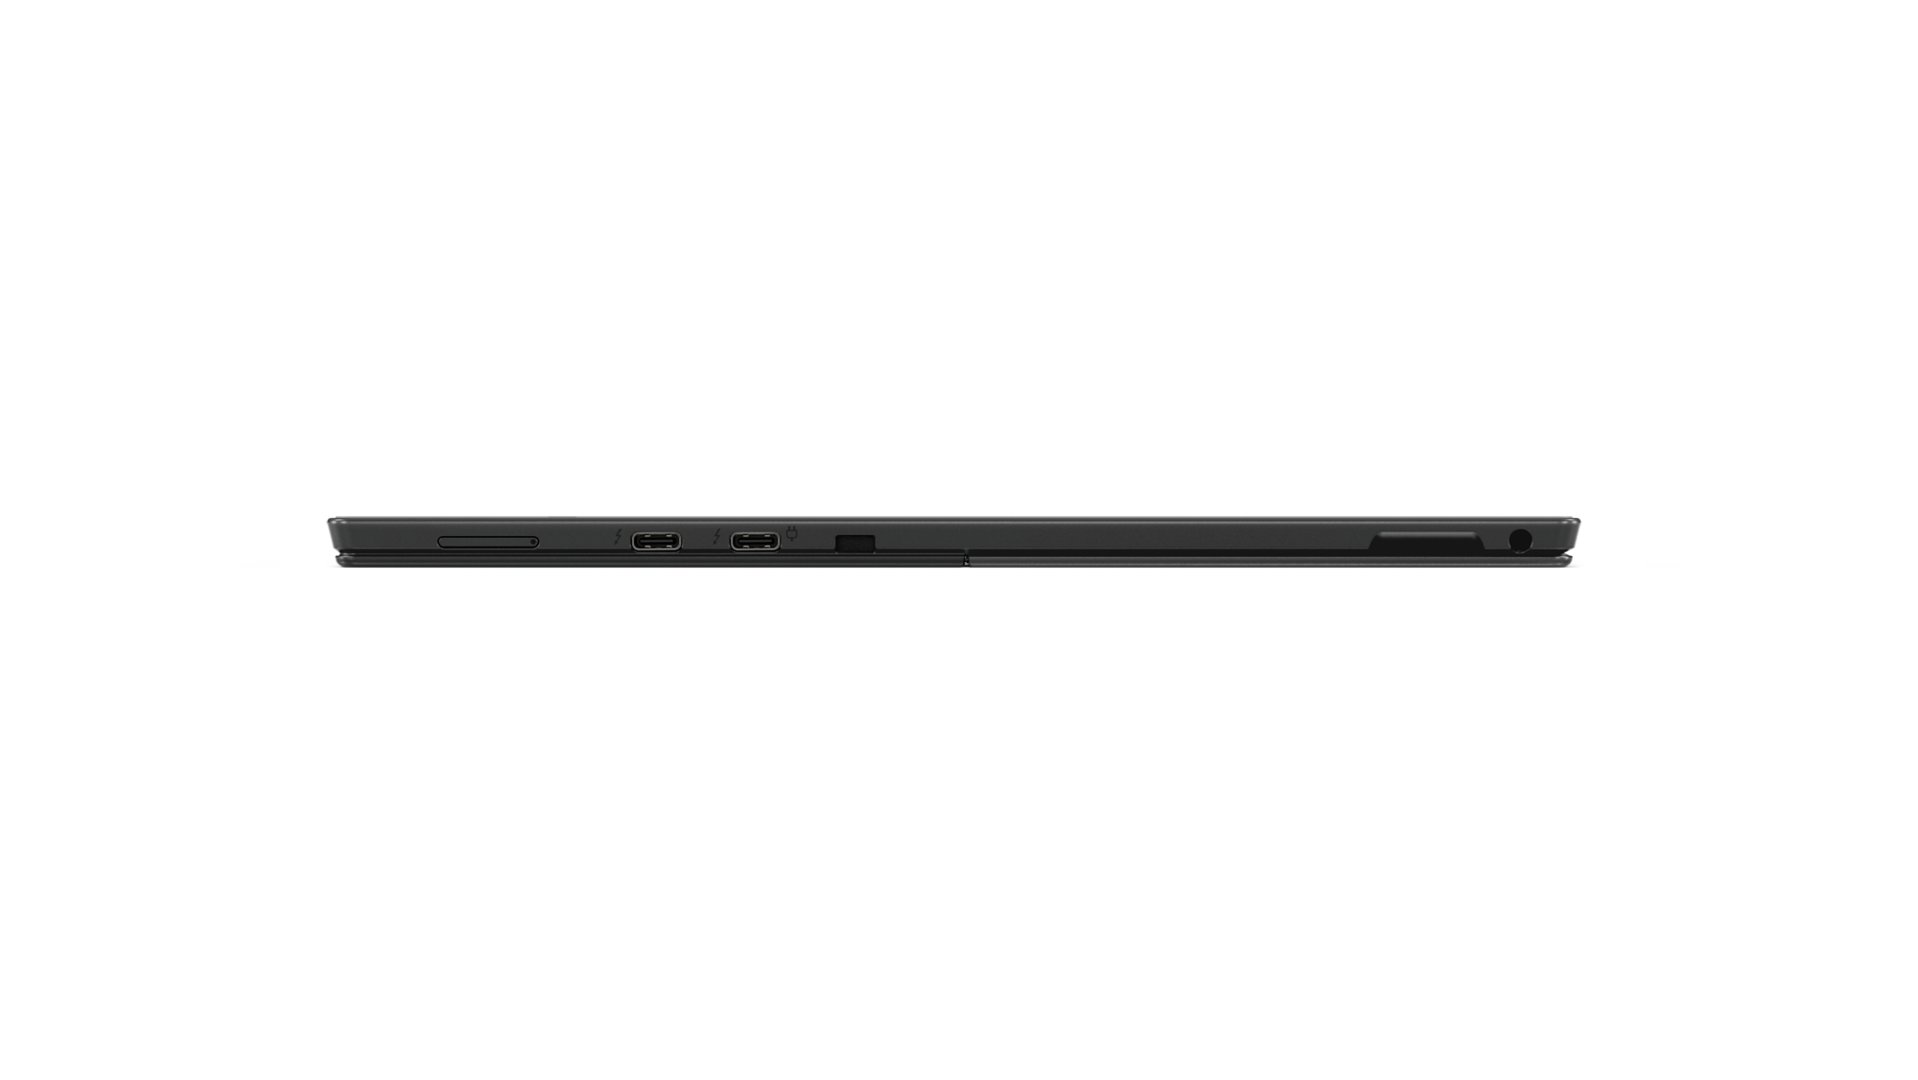 Lenovo ThinkPad X1 Tablet (2018)